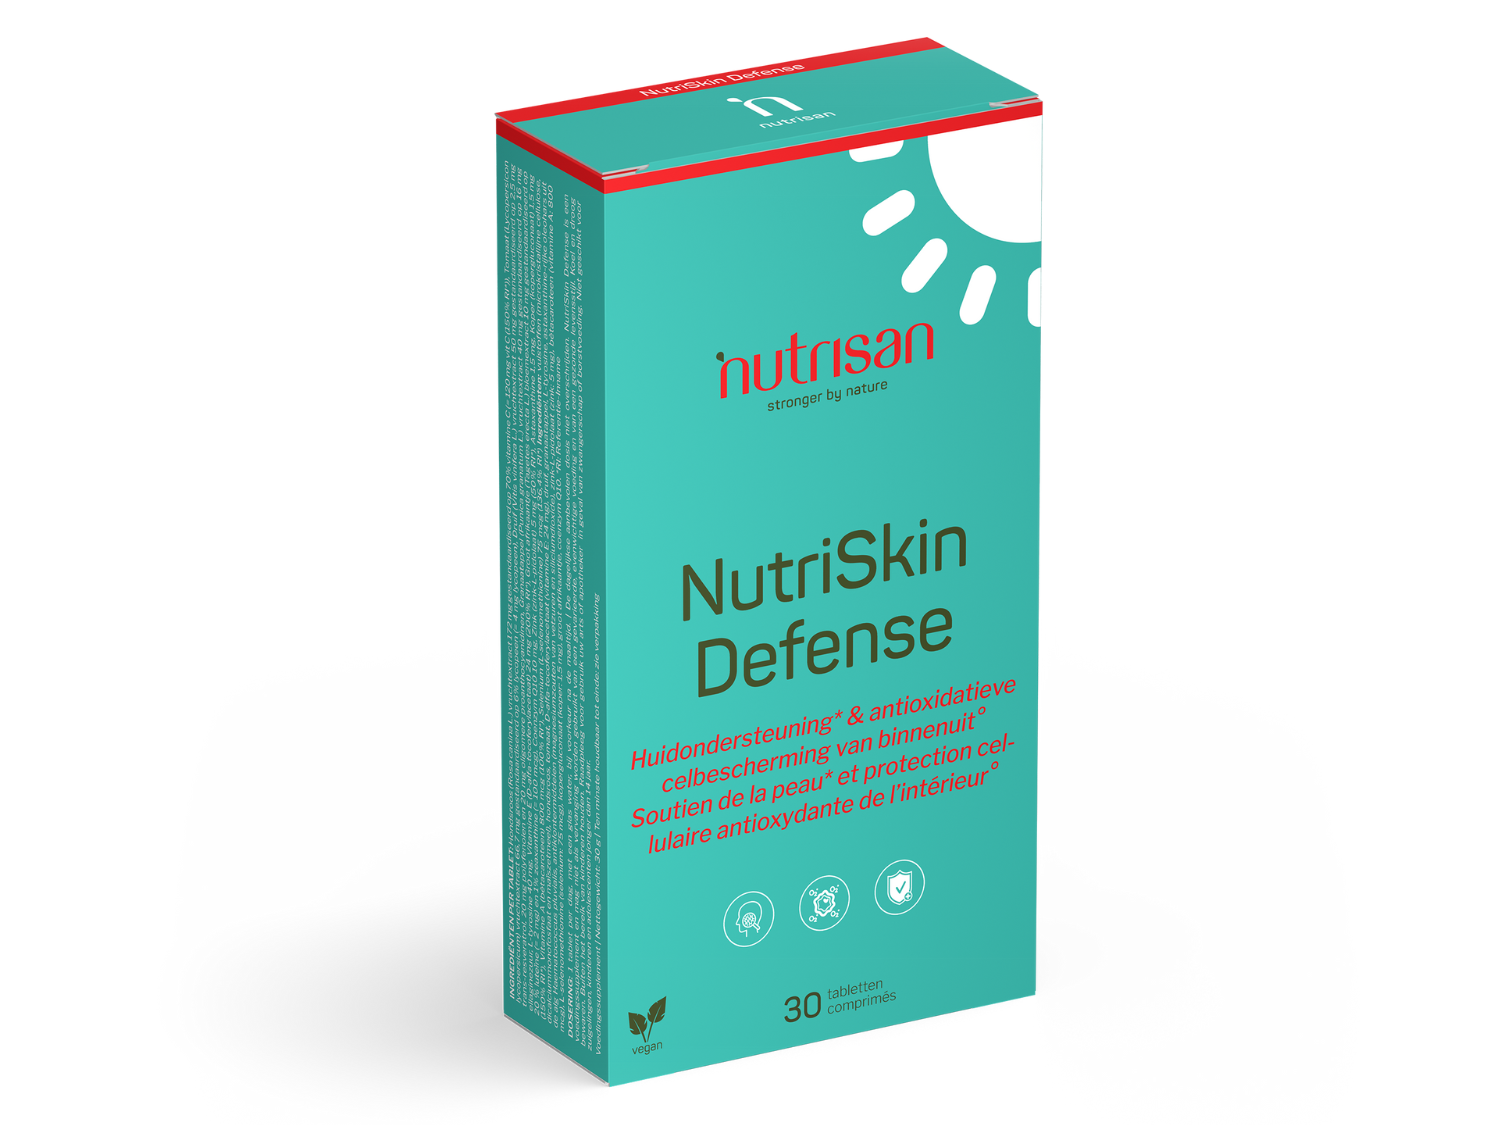 NutriSkin Defense